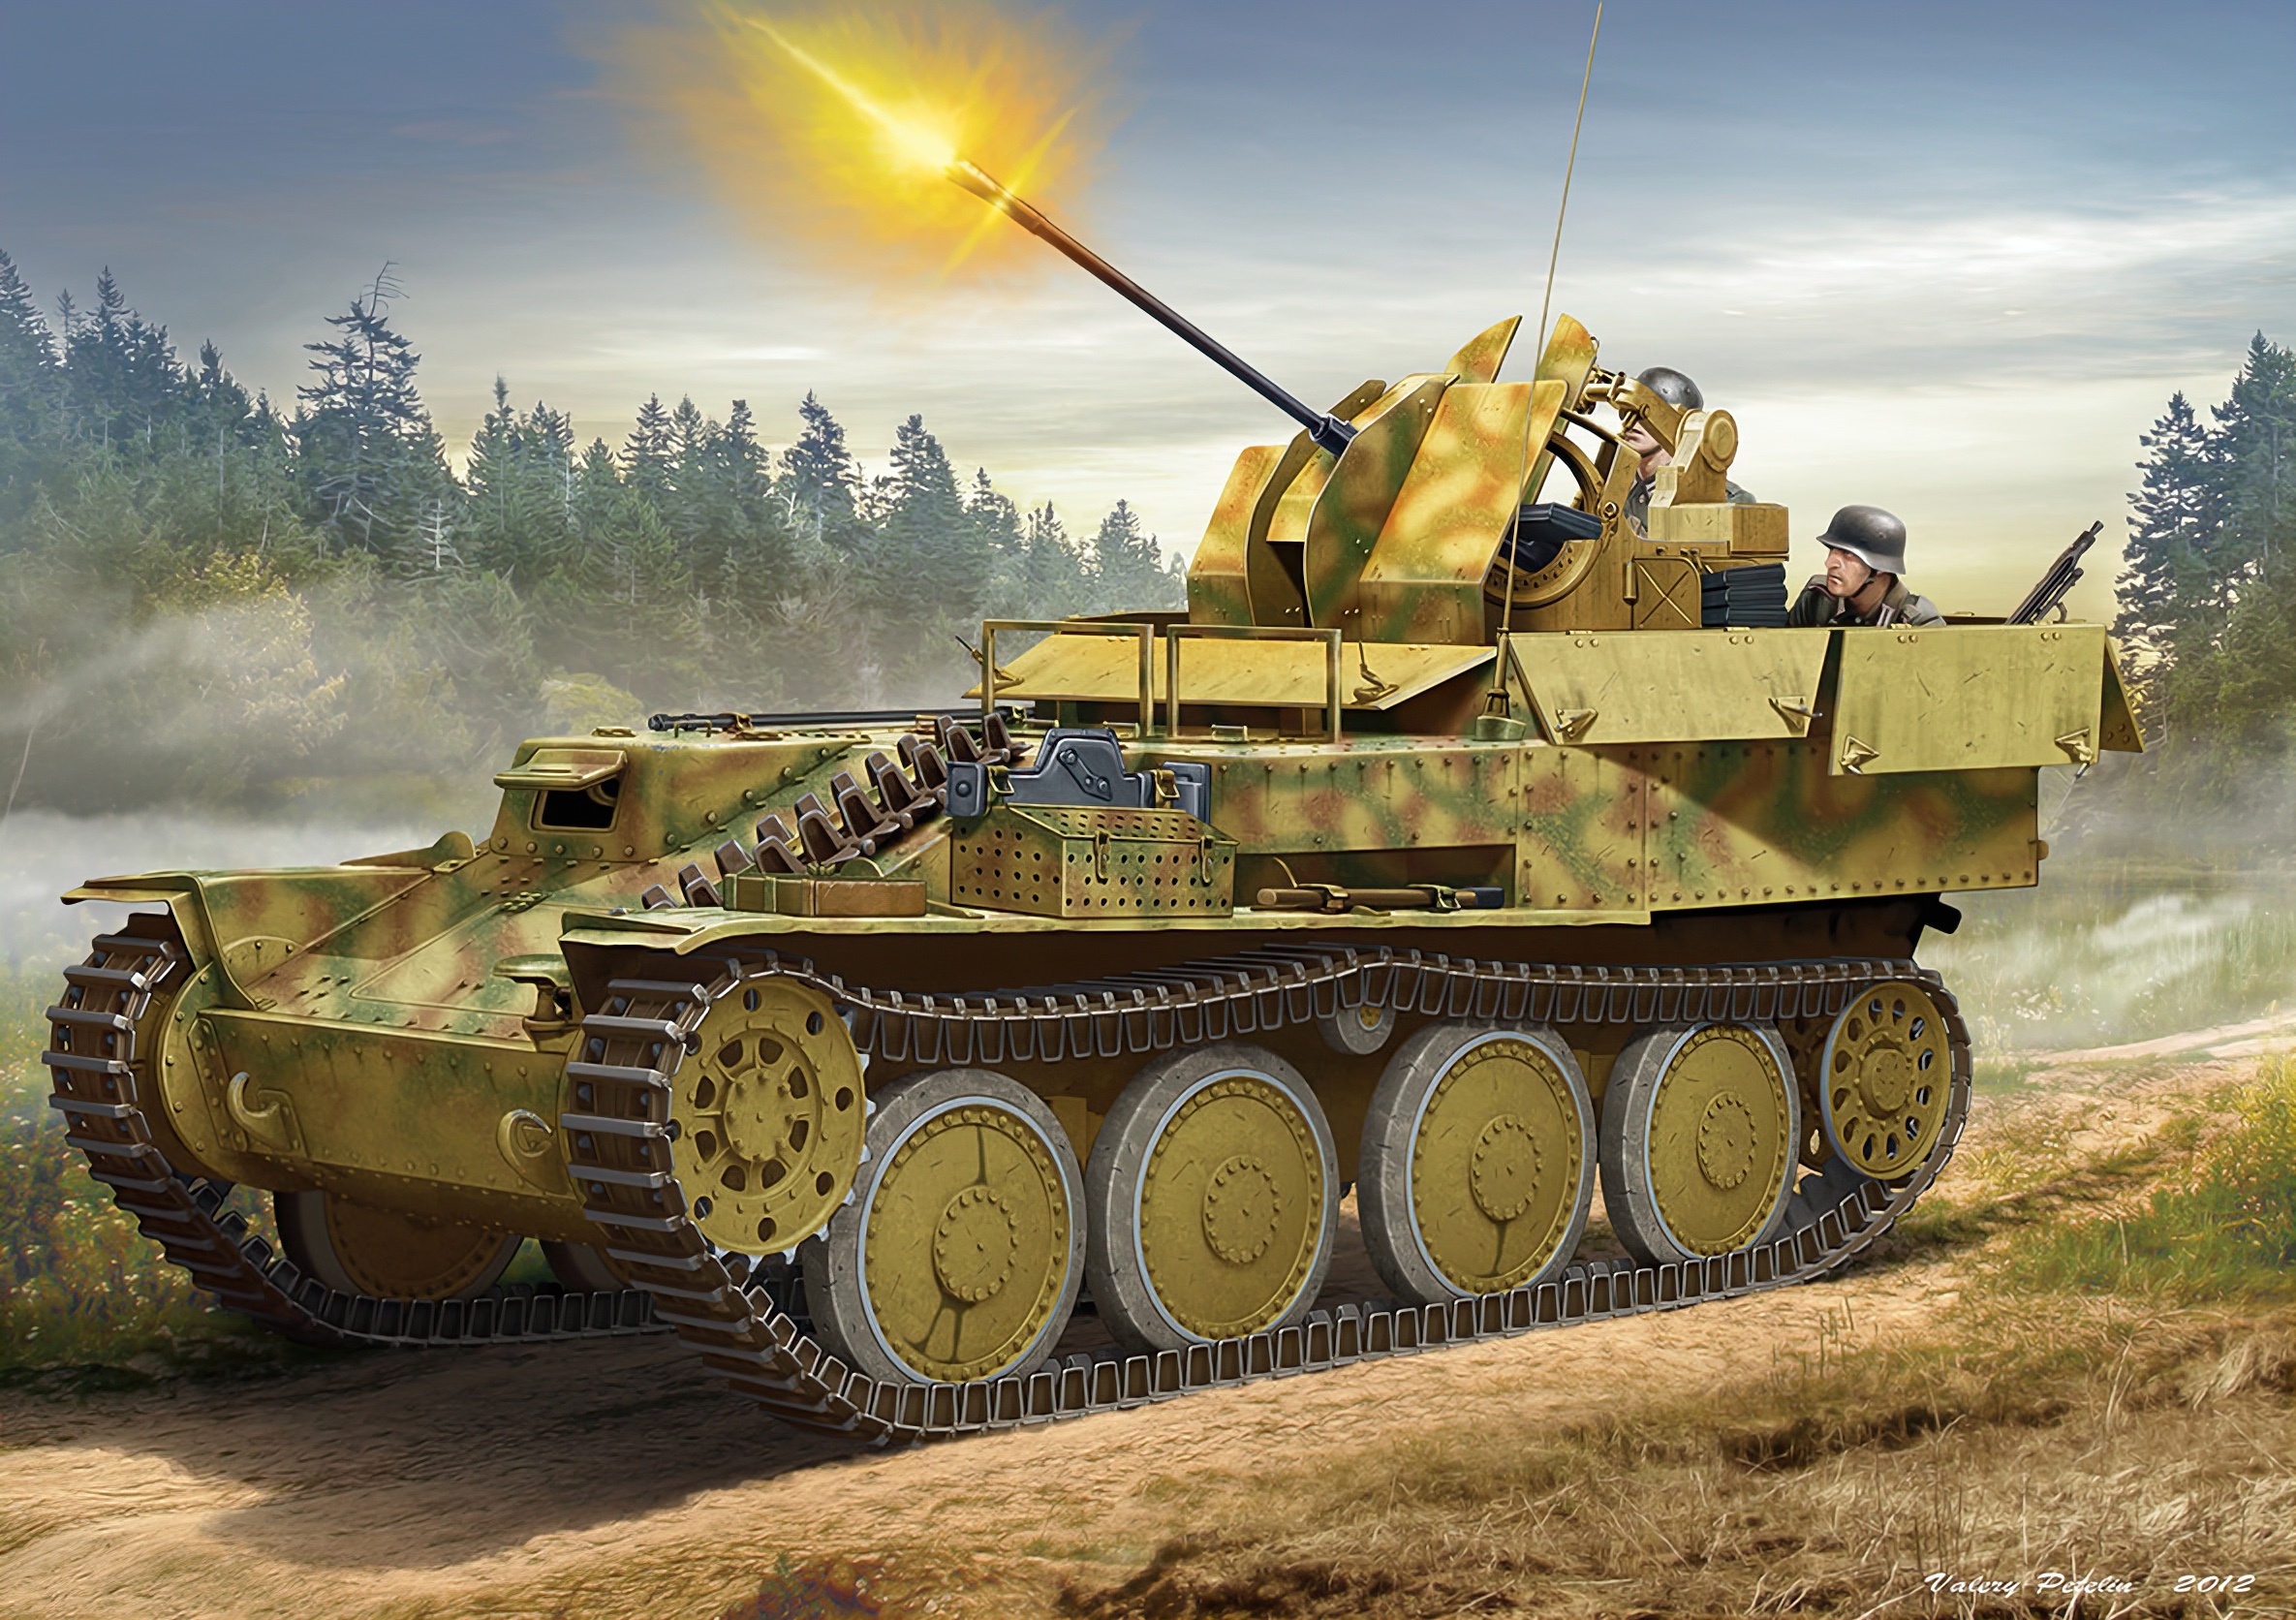 Танк гепард. ЗСУ Flakpanzer 38(t). ЗСУ Flakpanzer 38(t) "Gepard". Flakpanzer 38t. Flakpanzer 38t гепард.